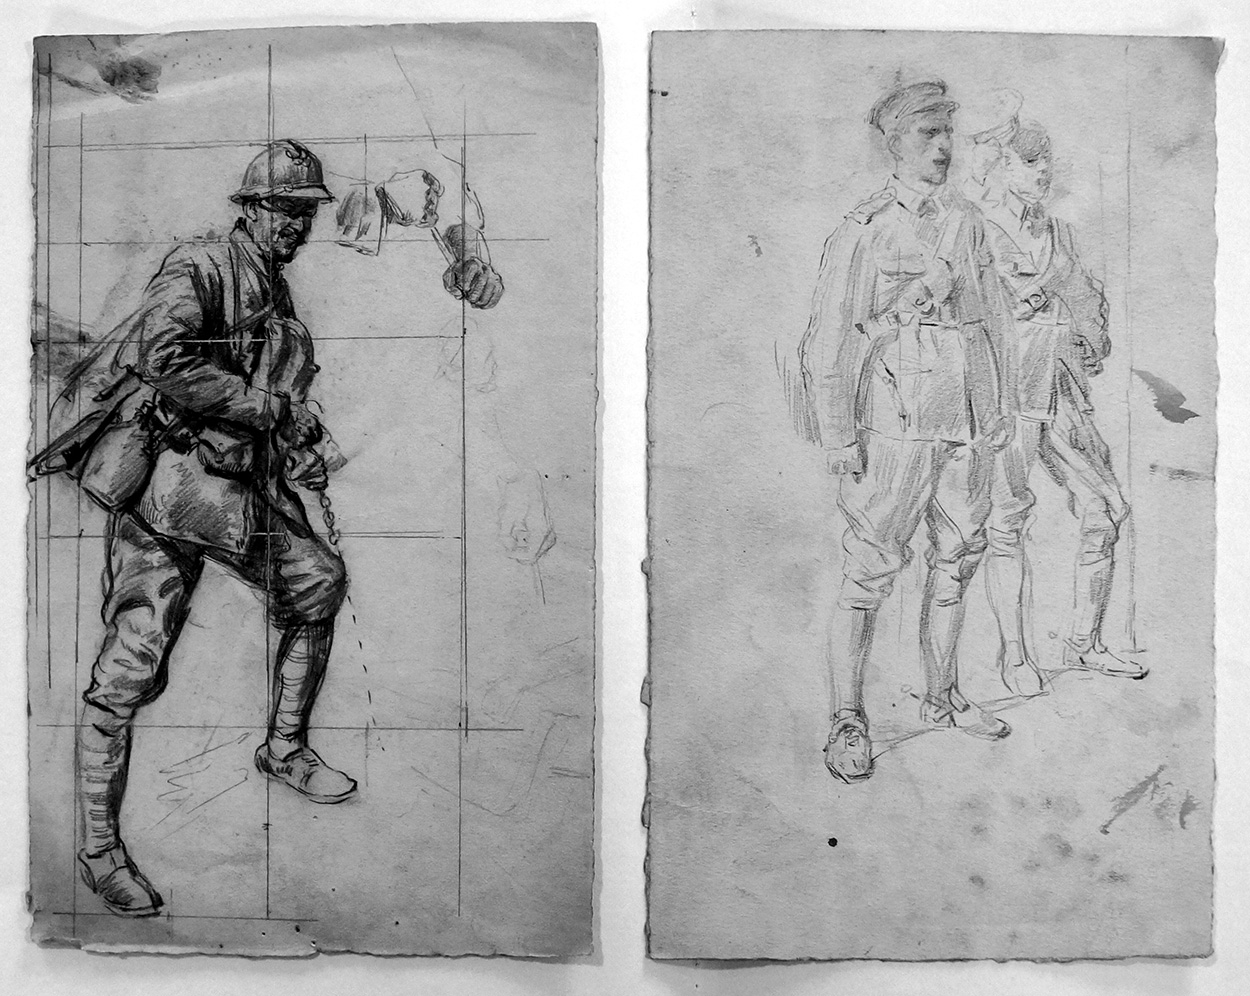 World War One Sketch 3 (Original) art by World Wars (Matania) at The Illustration Art Gallery